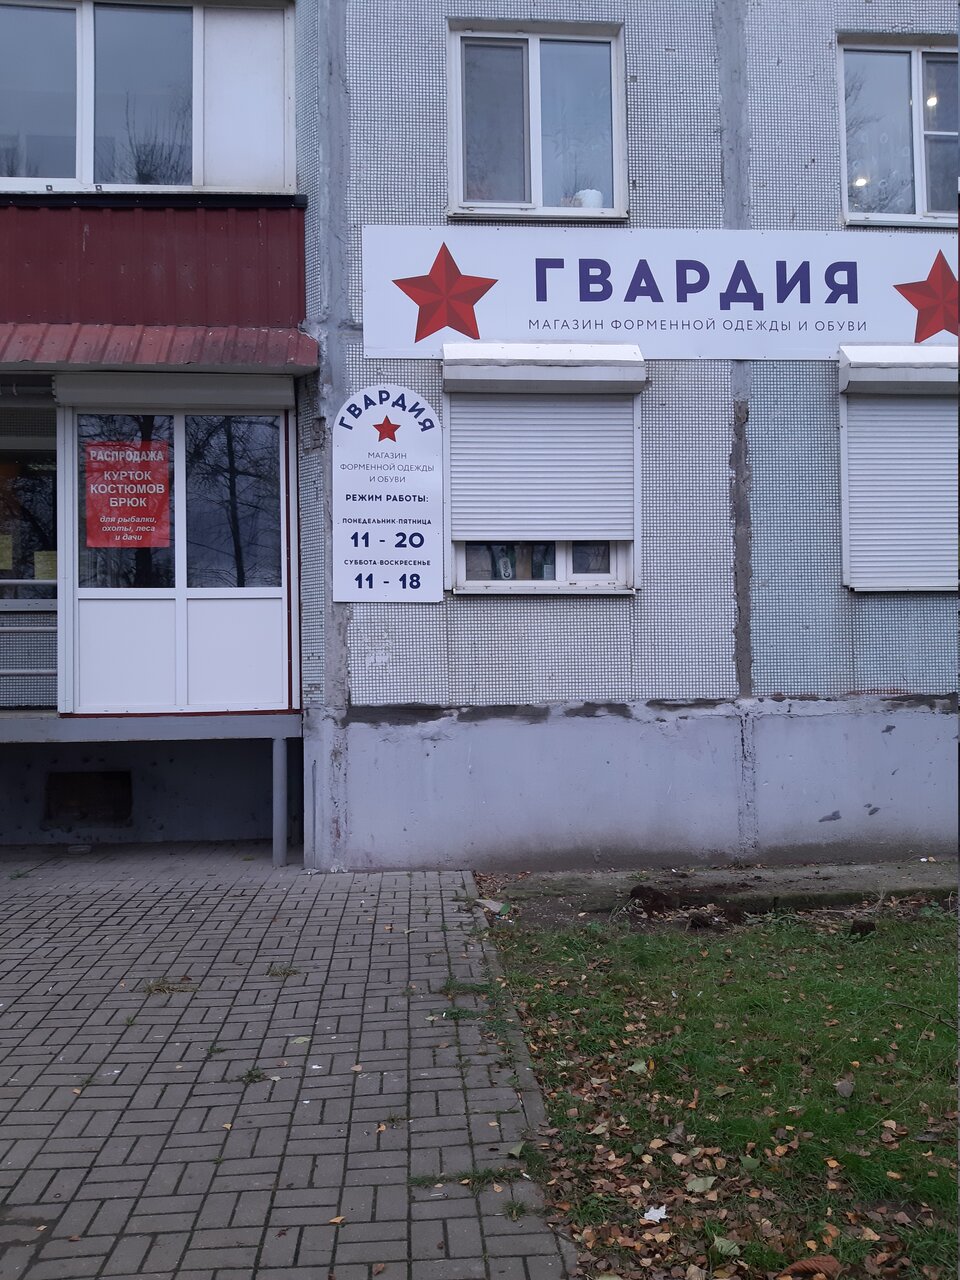 Армейский магазин "Гвардия" на Генерала Маргелова в Пскове